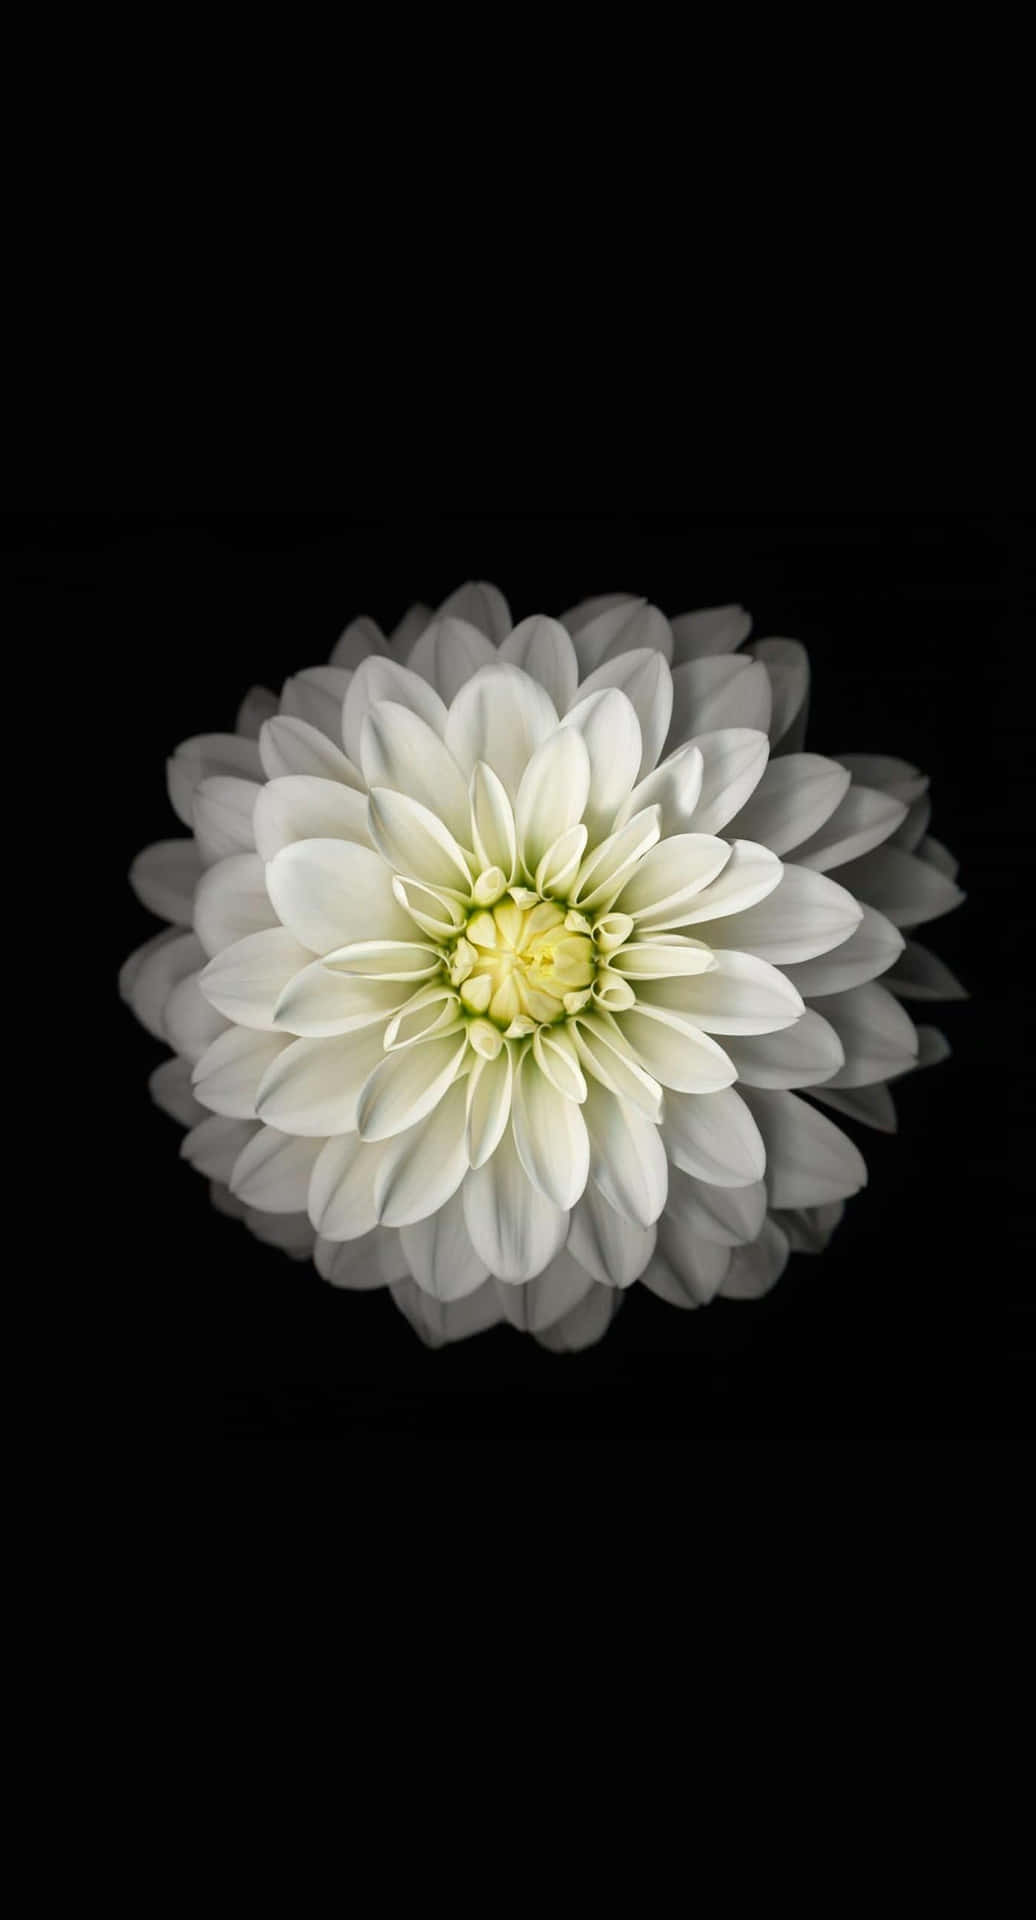 Dahlia Pinnata billede iPhone hvid blomst